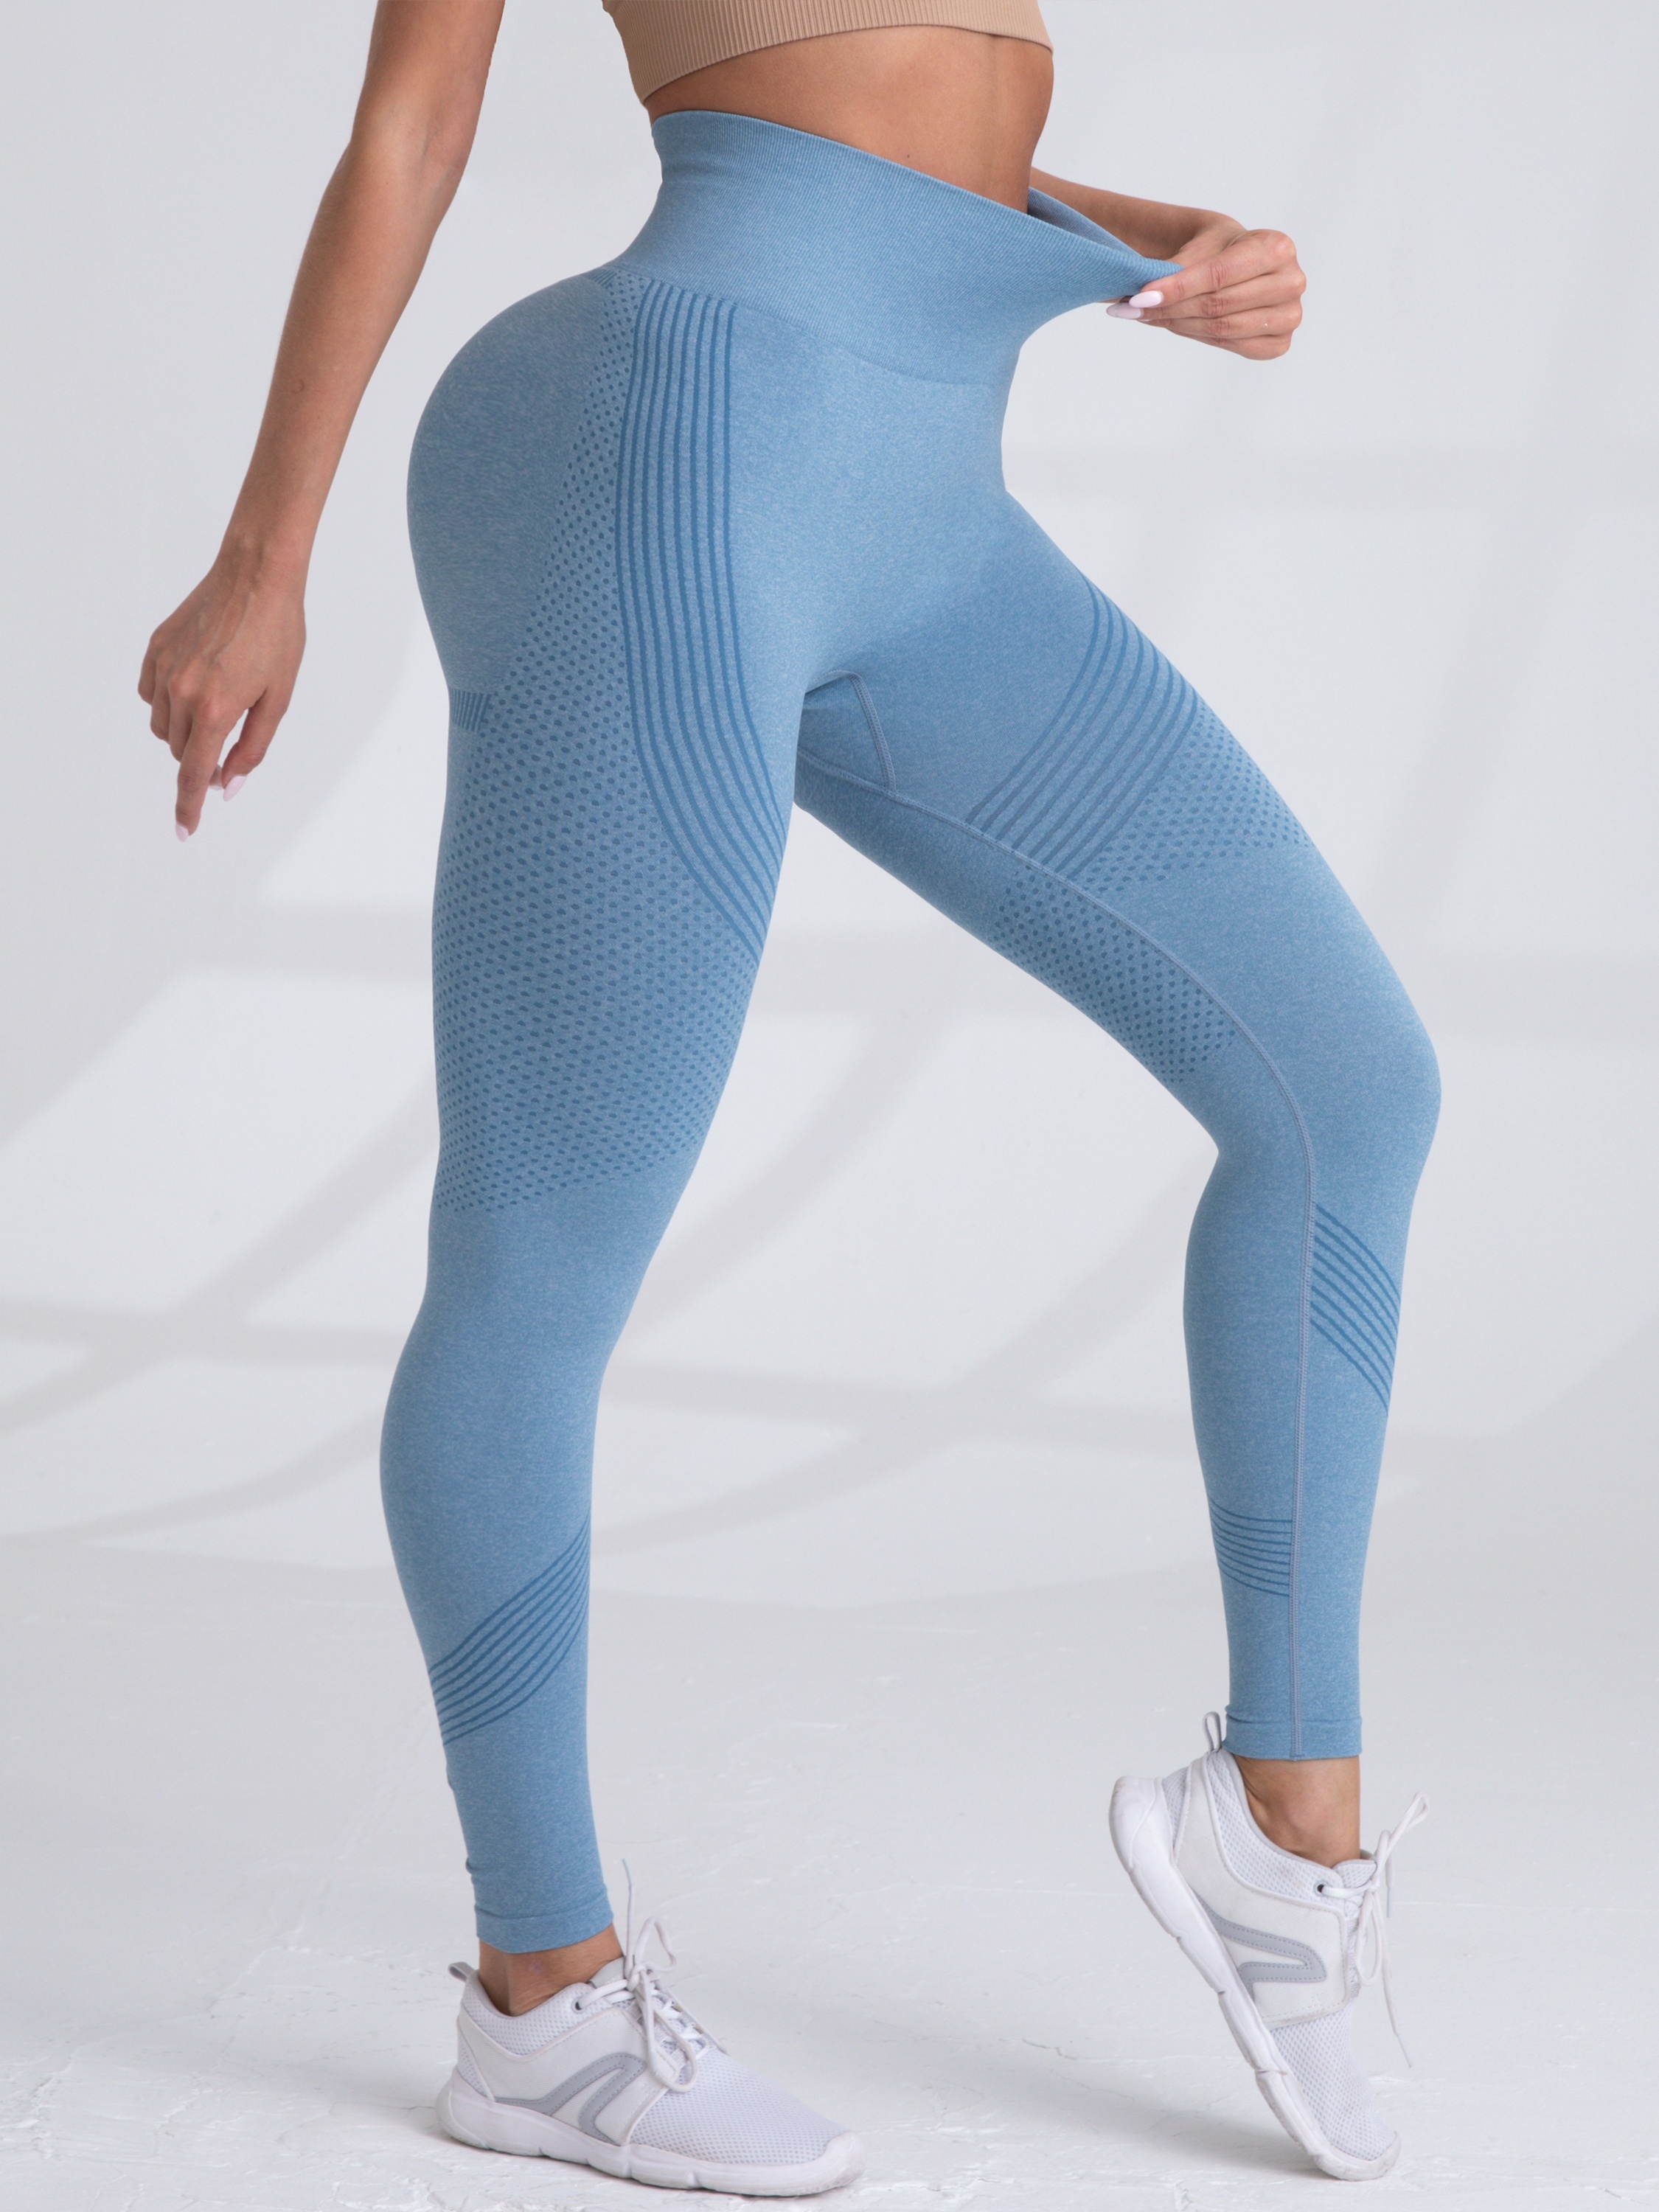 Women's High Waist Yoga Tummy Control Shorts, 5 Inch - Haze Blue / S